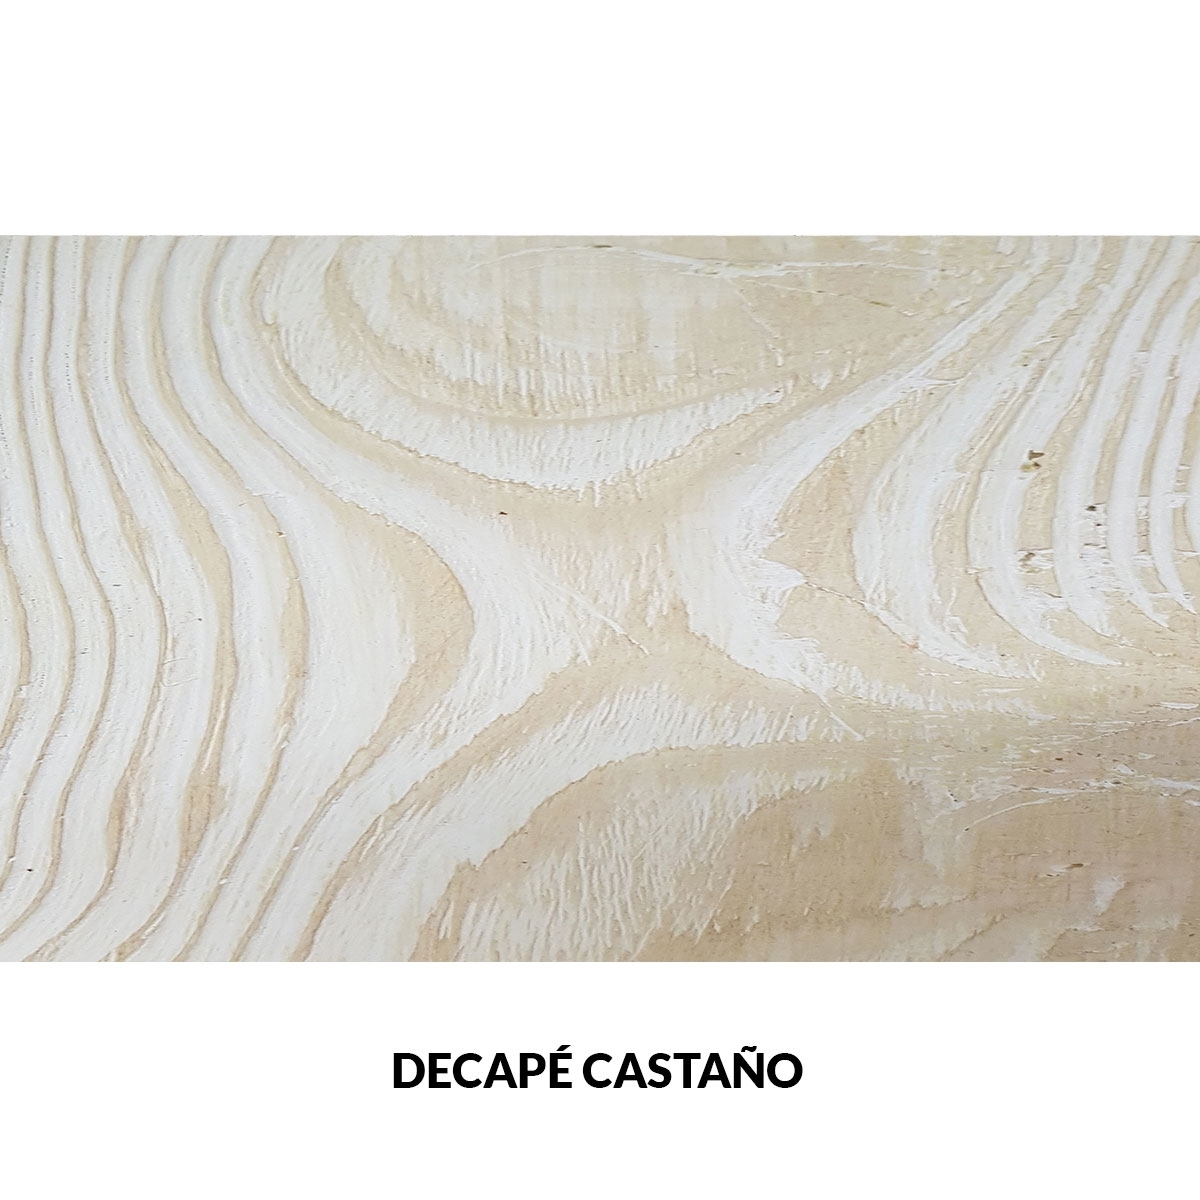 Panel rústico de seis lamas imitación madera de 300x62cm decape castaño